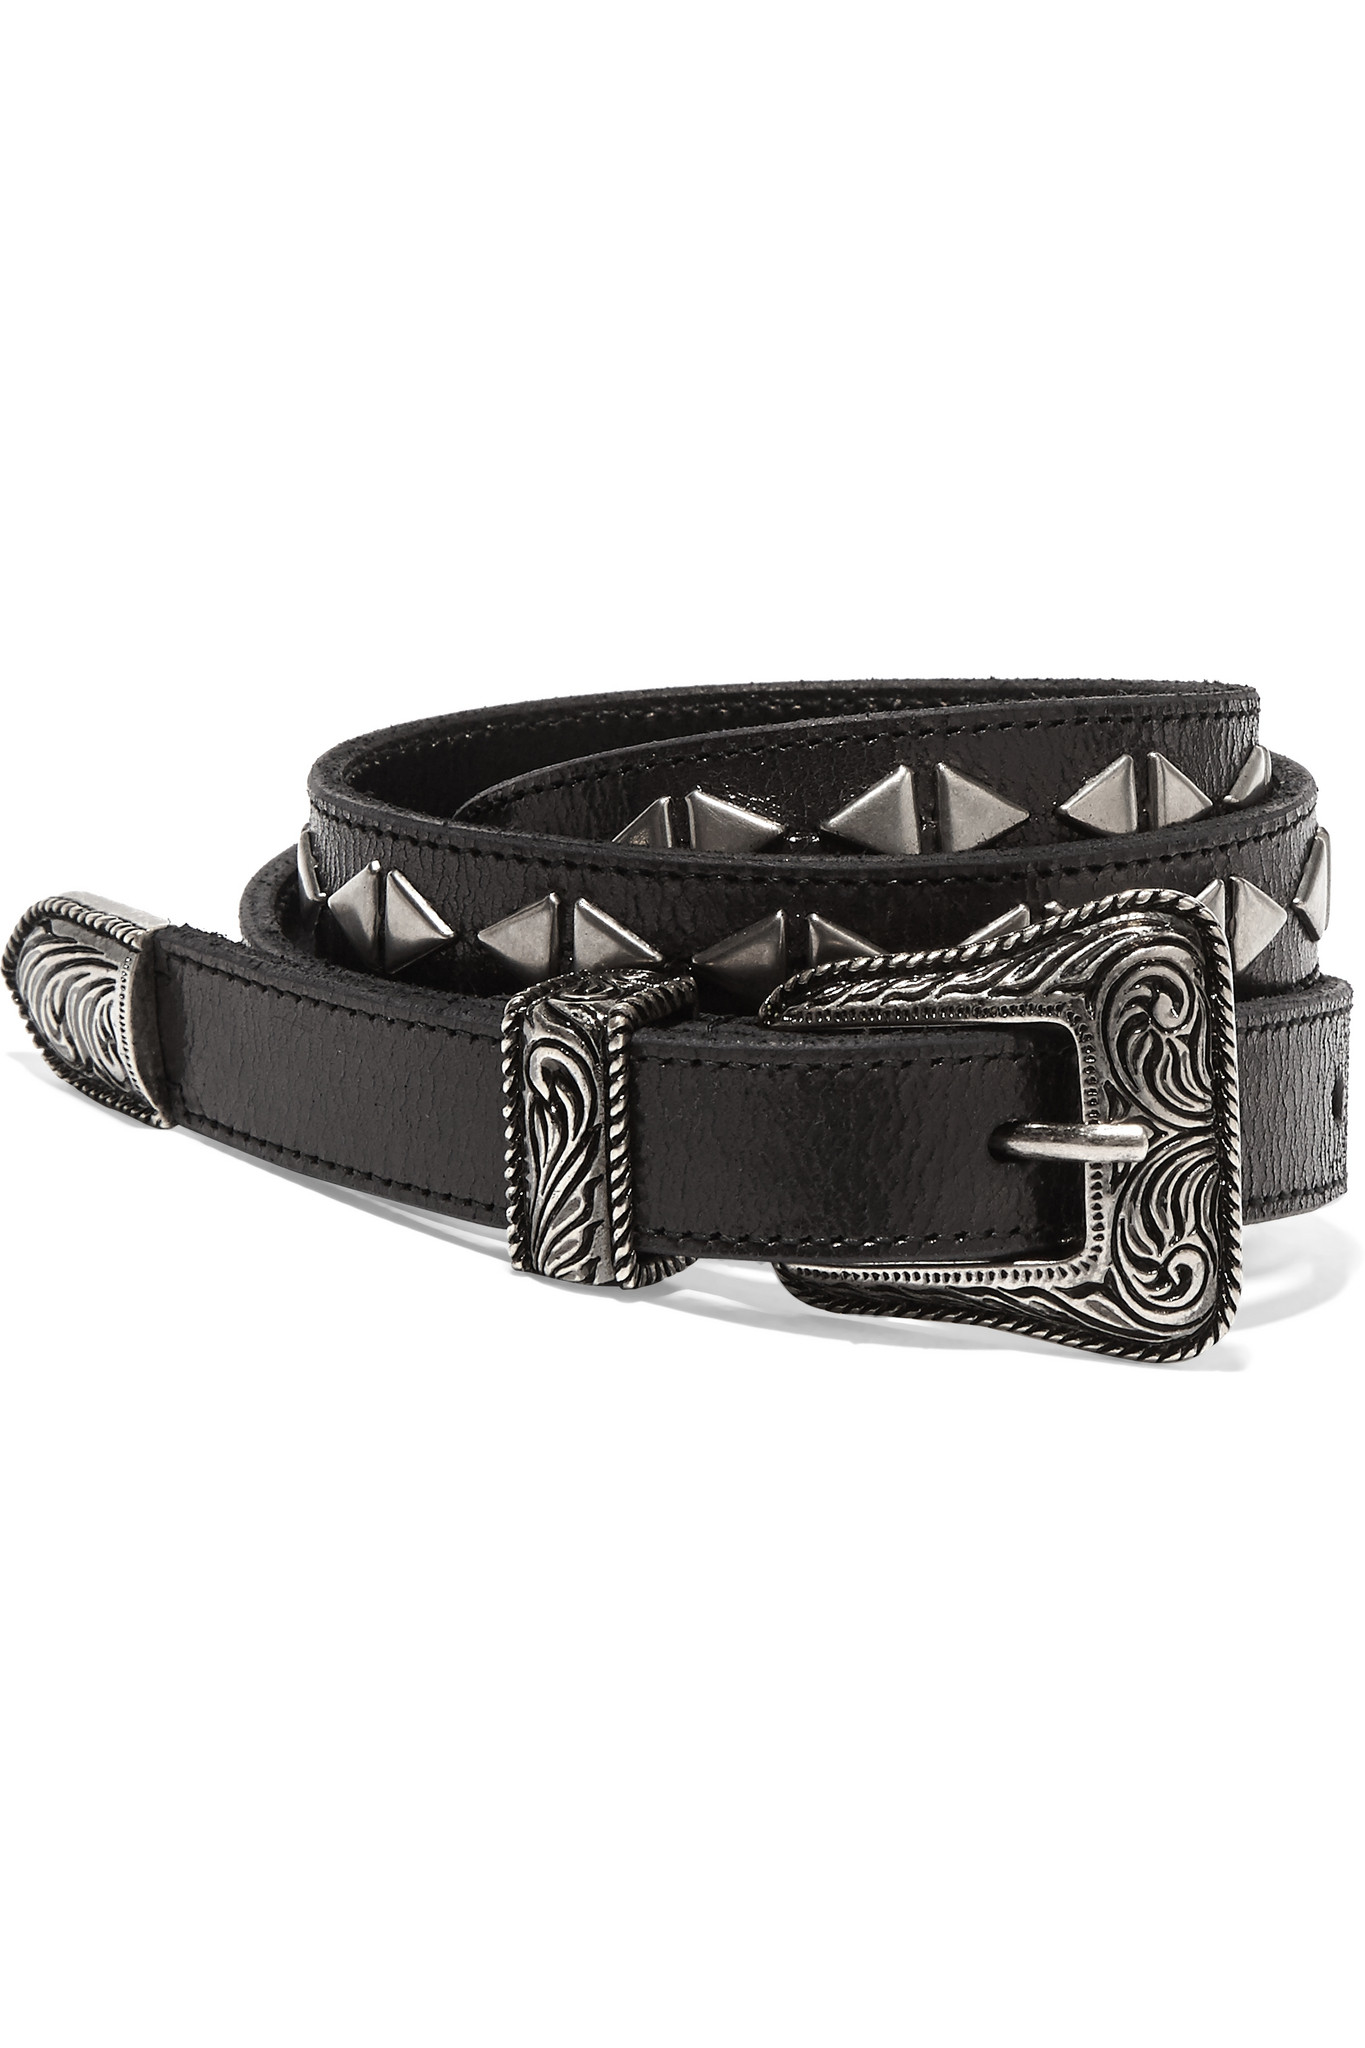 Saint Laurent Studded Leather Belt in Black - Lyst